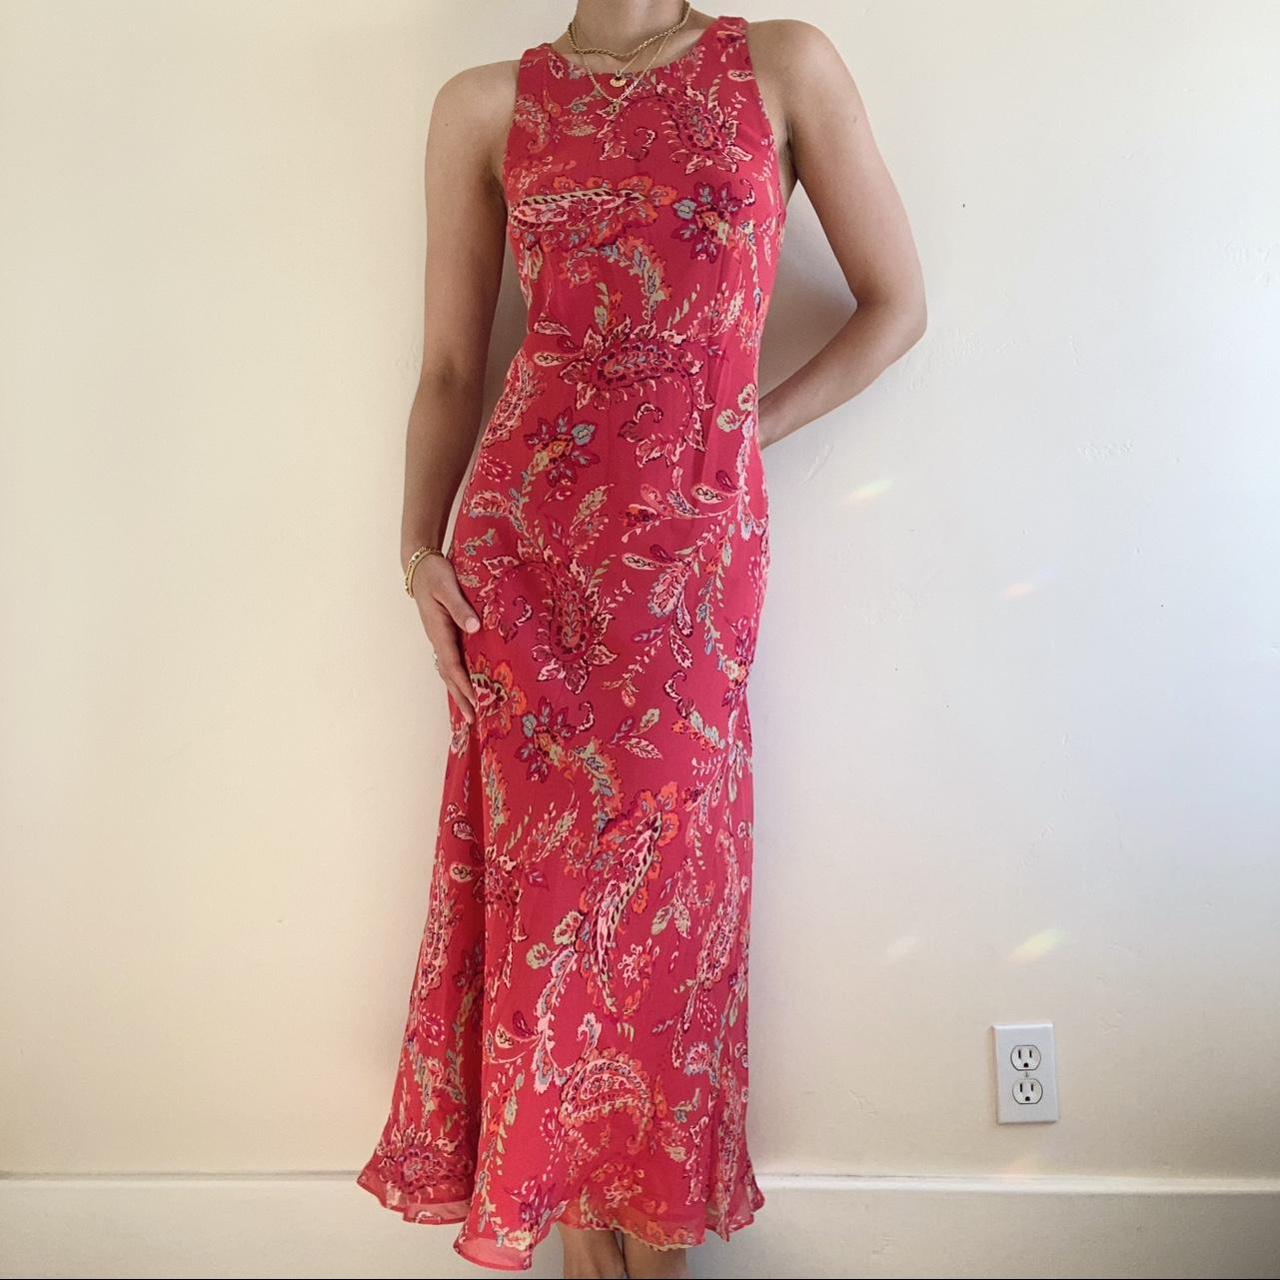 Beautiful Slip Paisley Dress - Size 6 (true to... - Depop